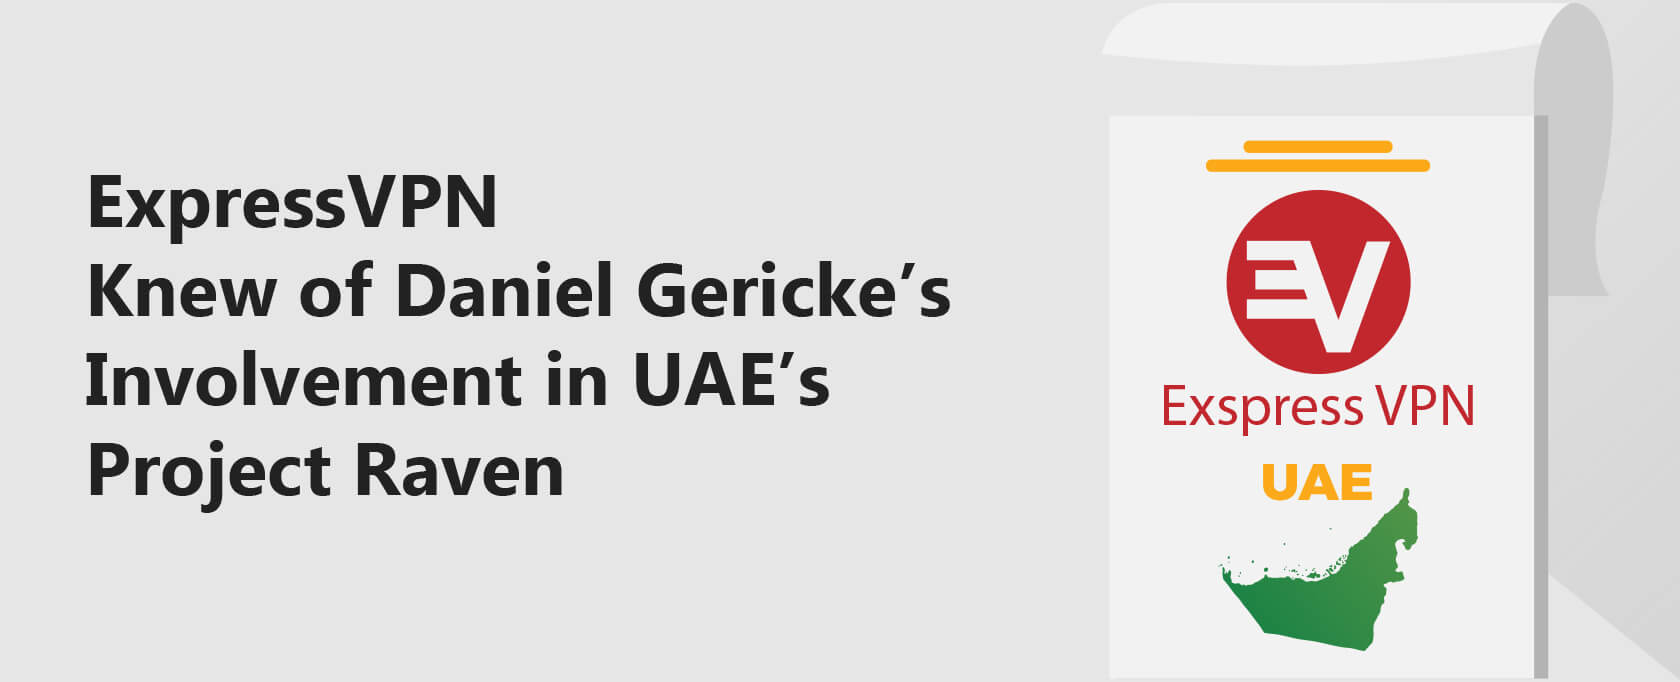 ExpressVPN Knew of Daniel Gericke’s Involvement in UAE’s Project Raven